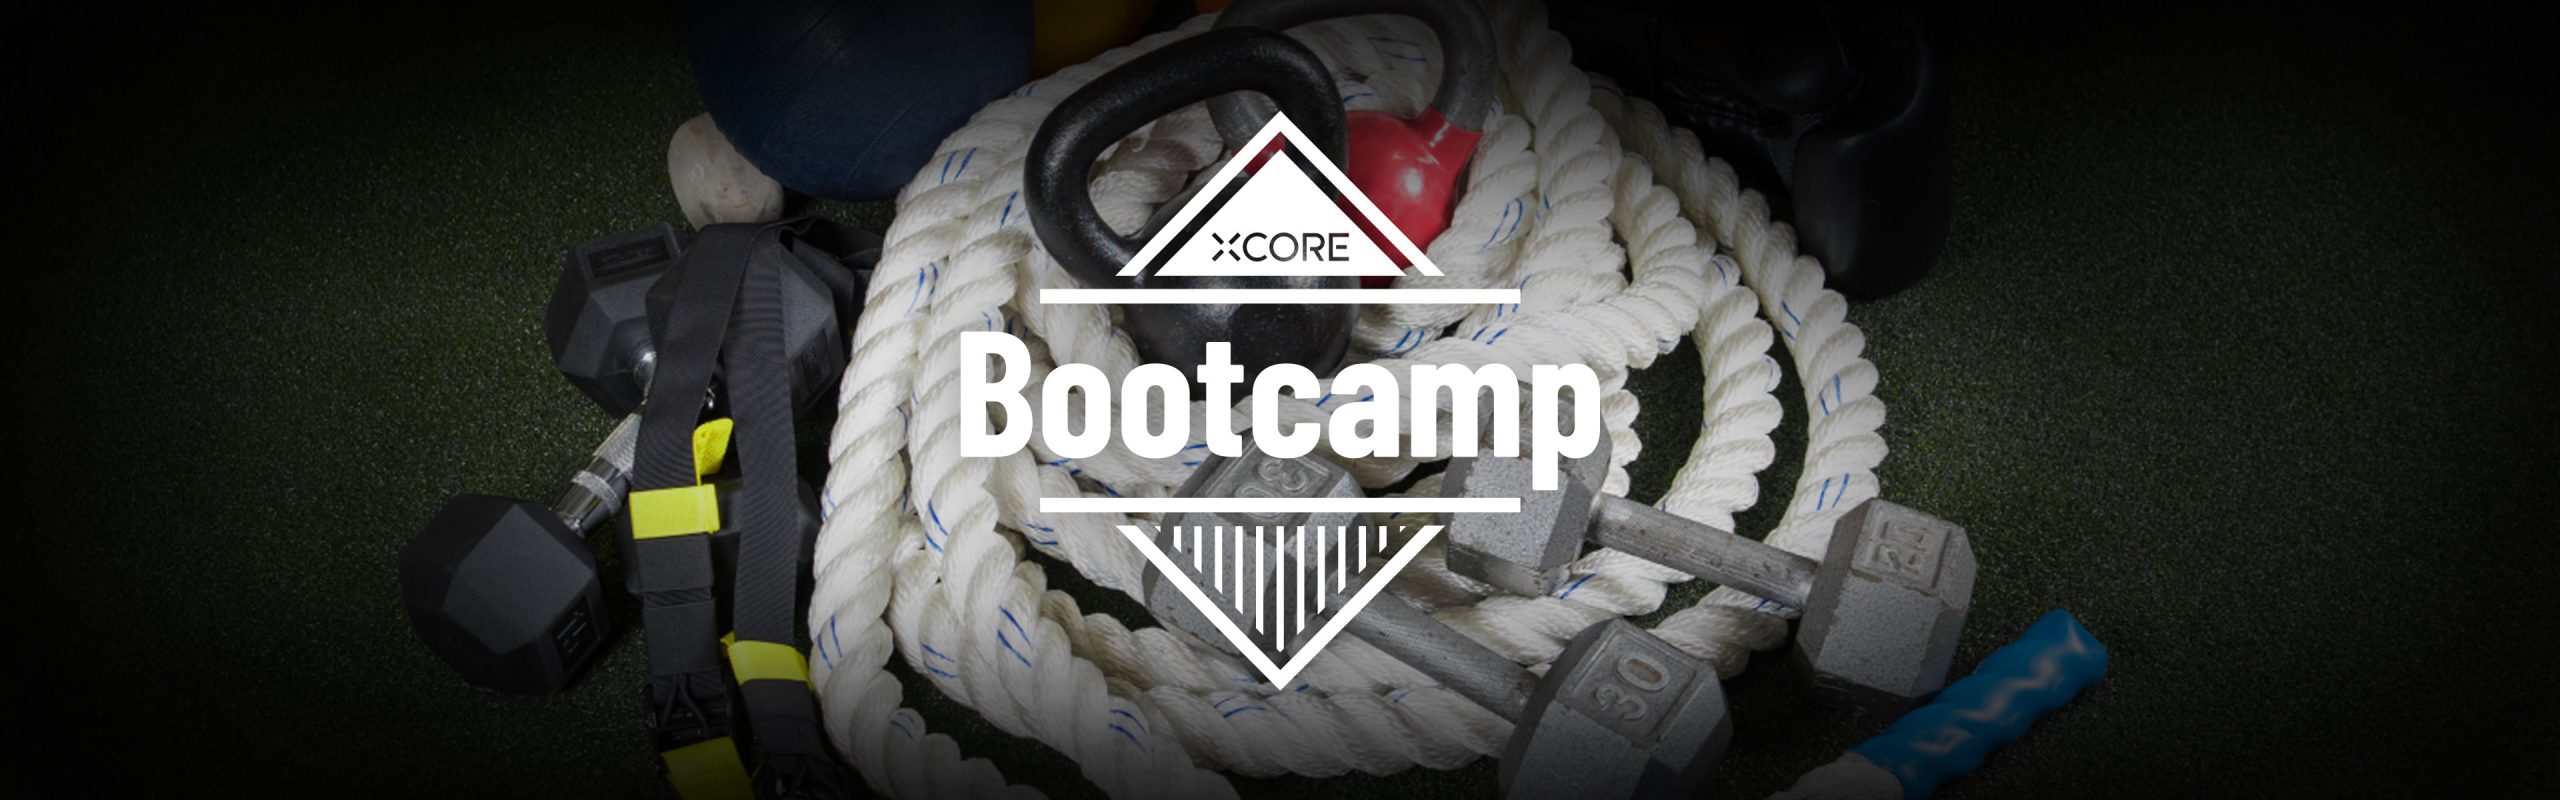 Anmeldung Bootcamp